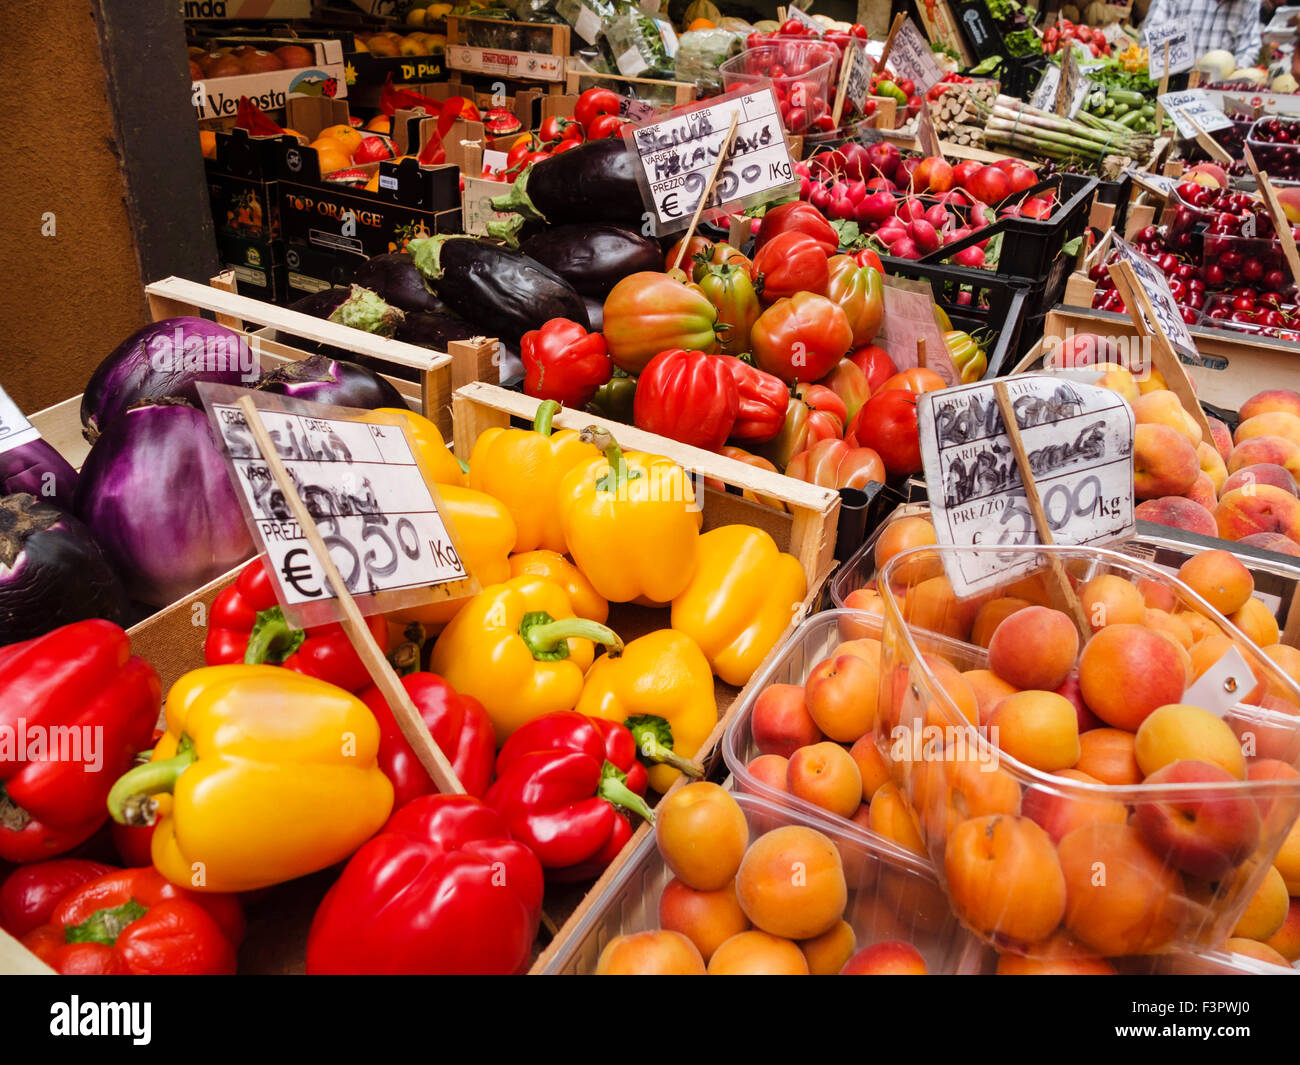 Italy, Emilia-Romagna region, Bologna - market food sellers. Fruit and vegetable market. Stock Photo